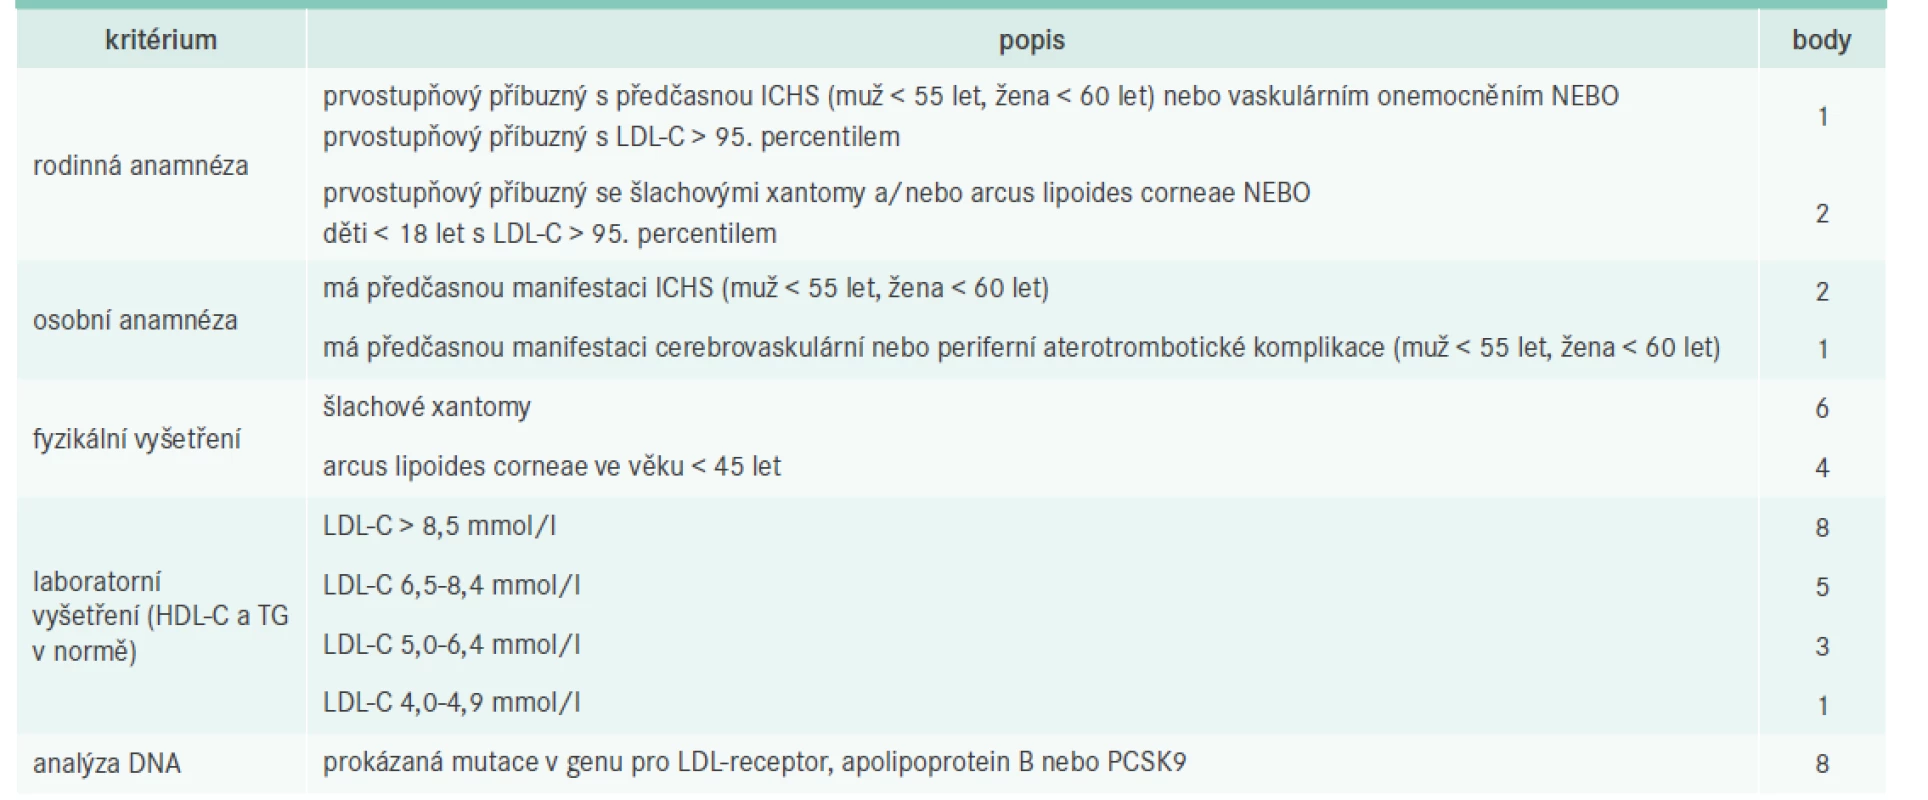 Dutch Lipid Clinic Network Criteria pro diagnózu familiární hypercholesterolemie. Upraveno podle [4]